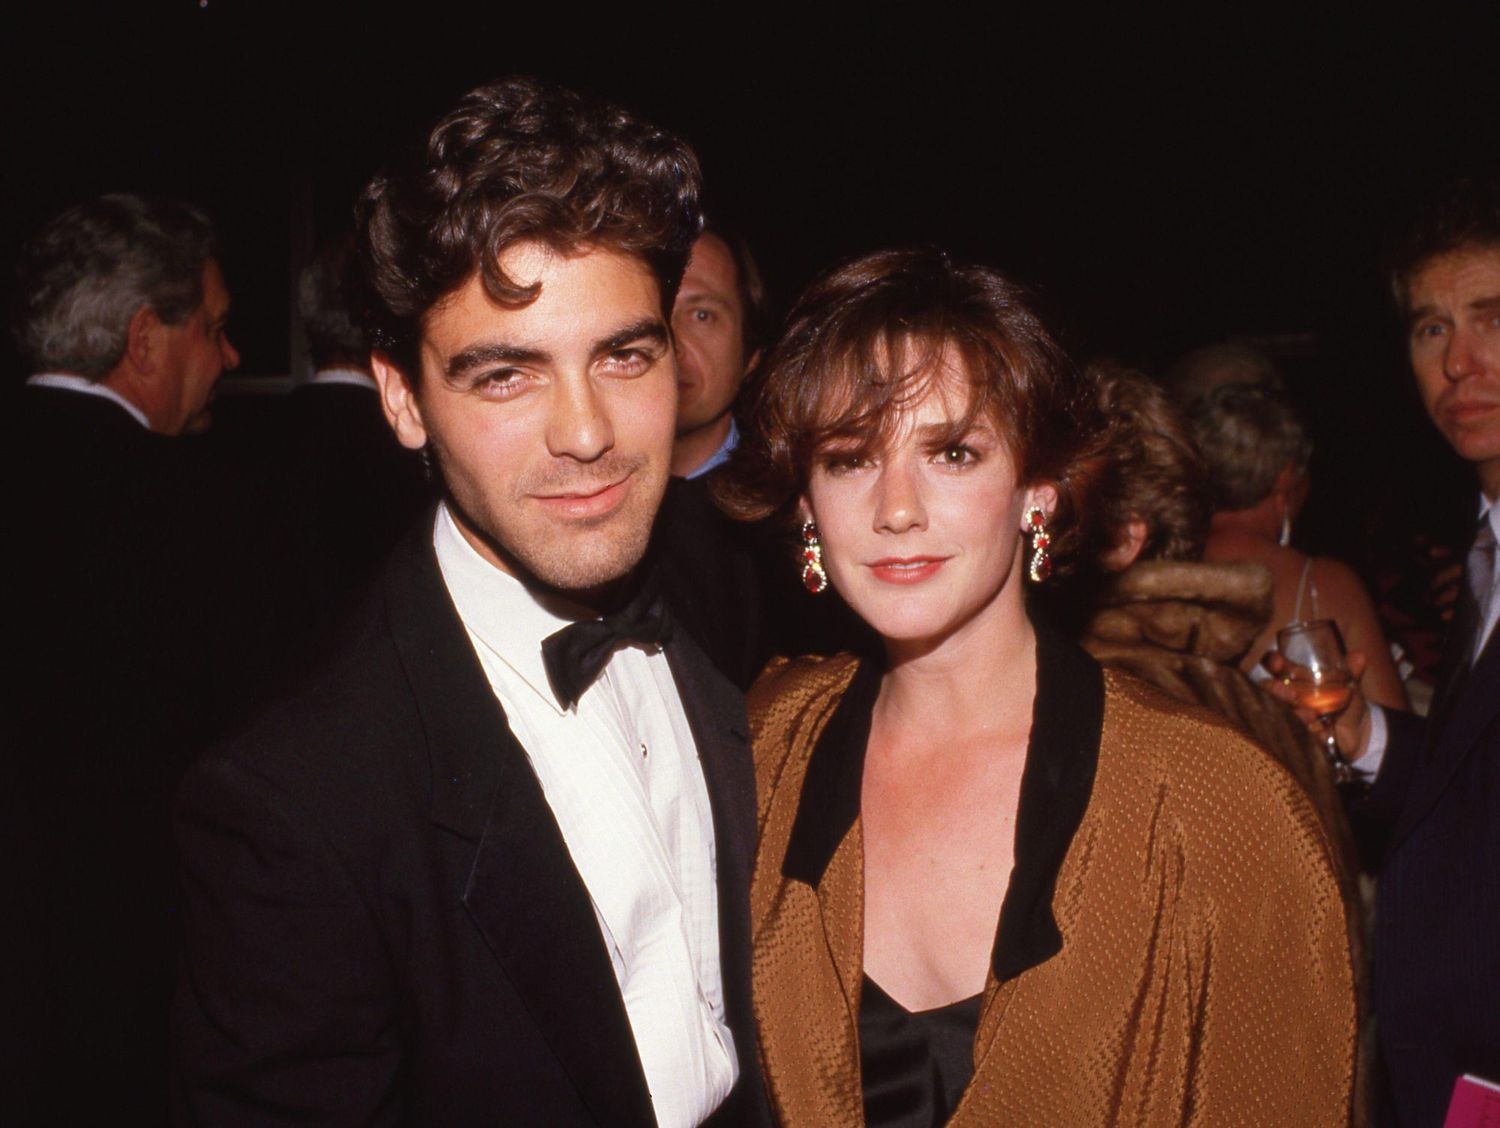 George Clooney and Talia Balsam